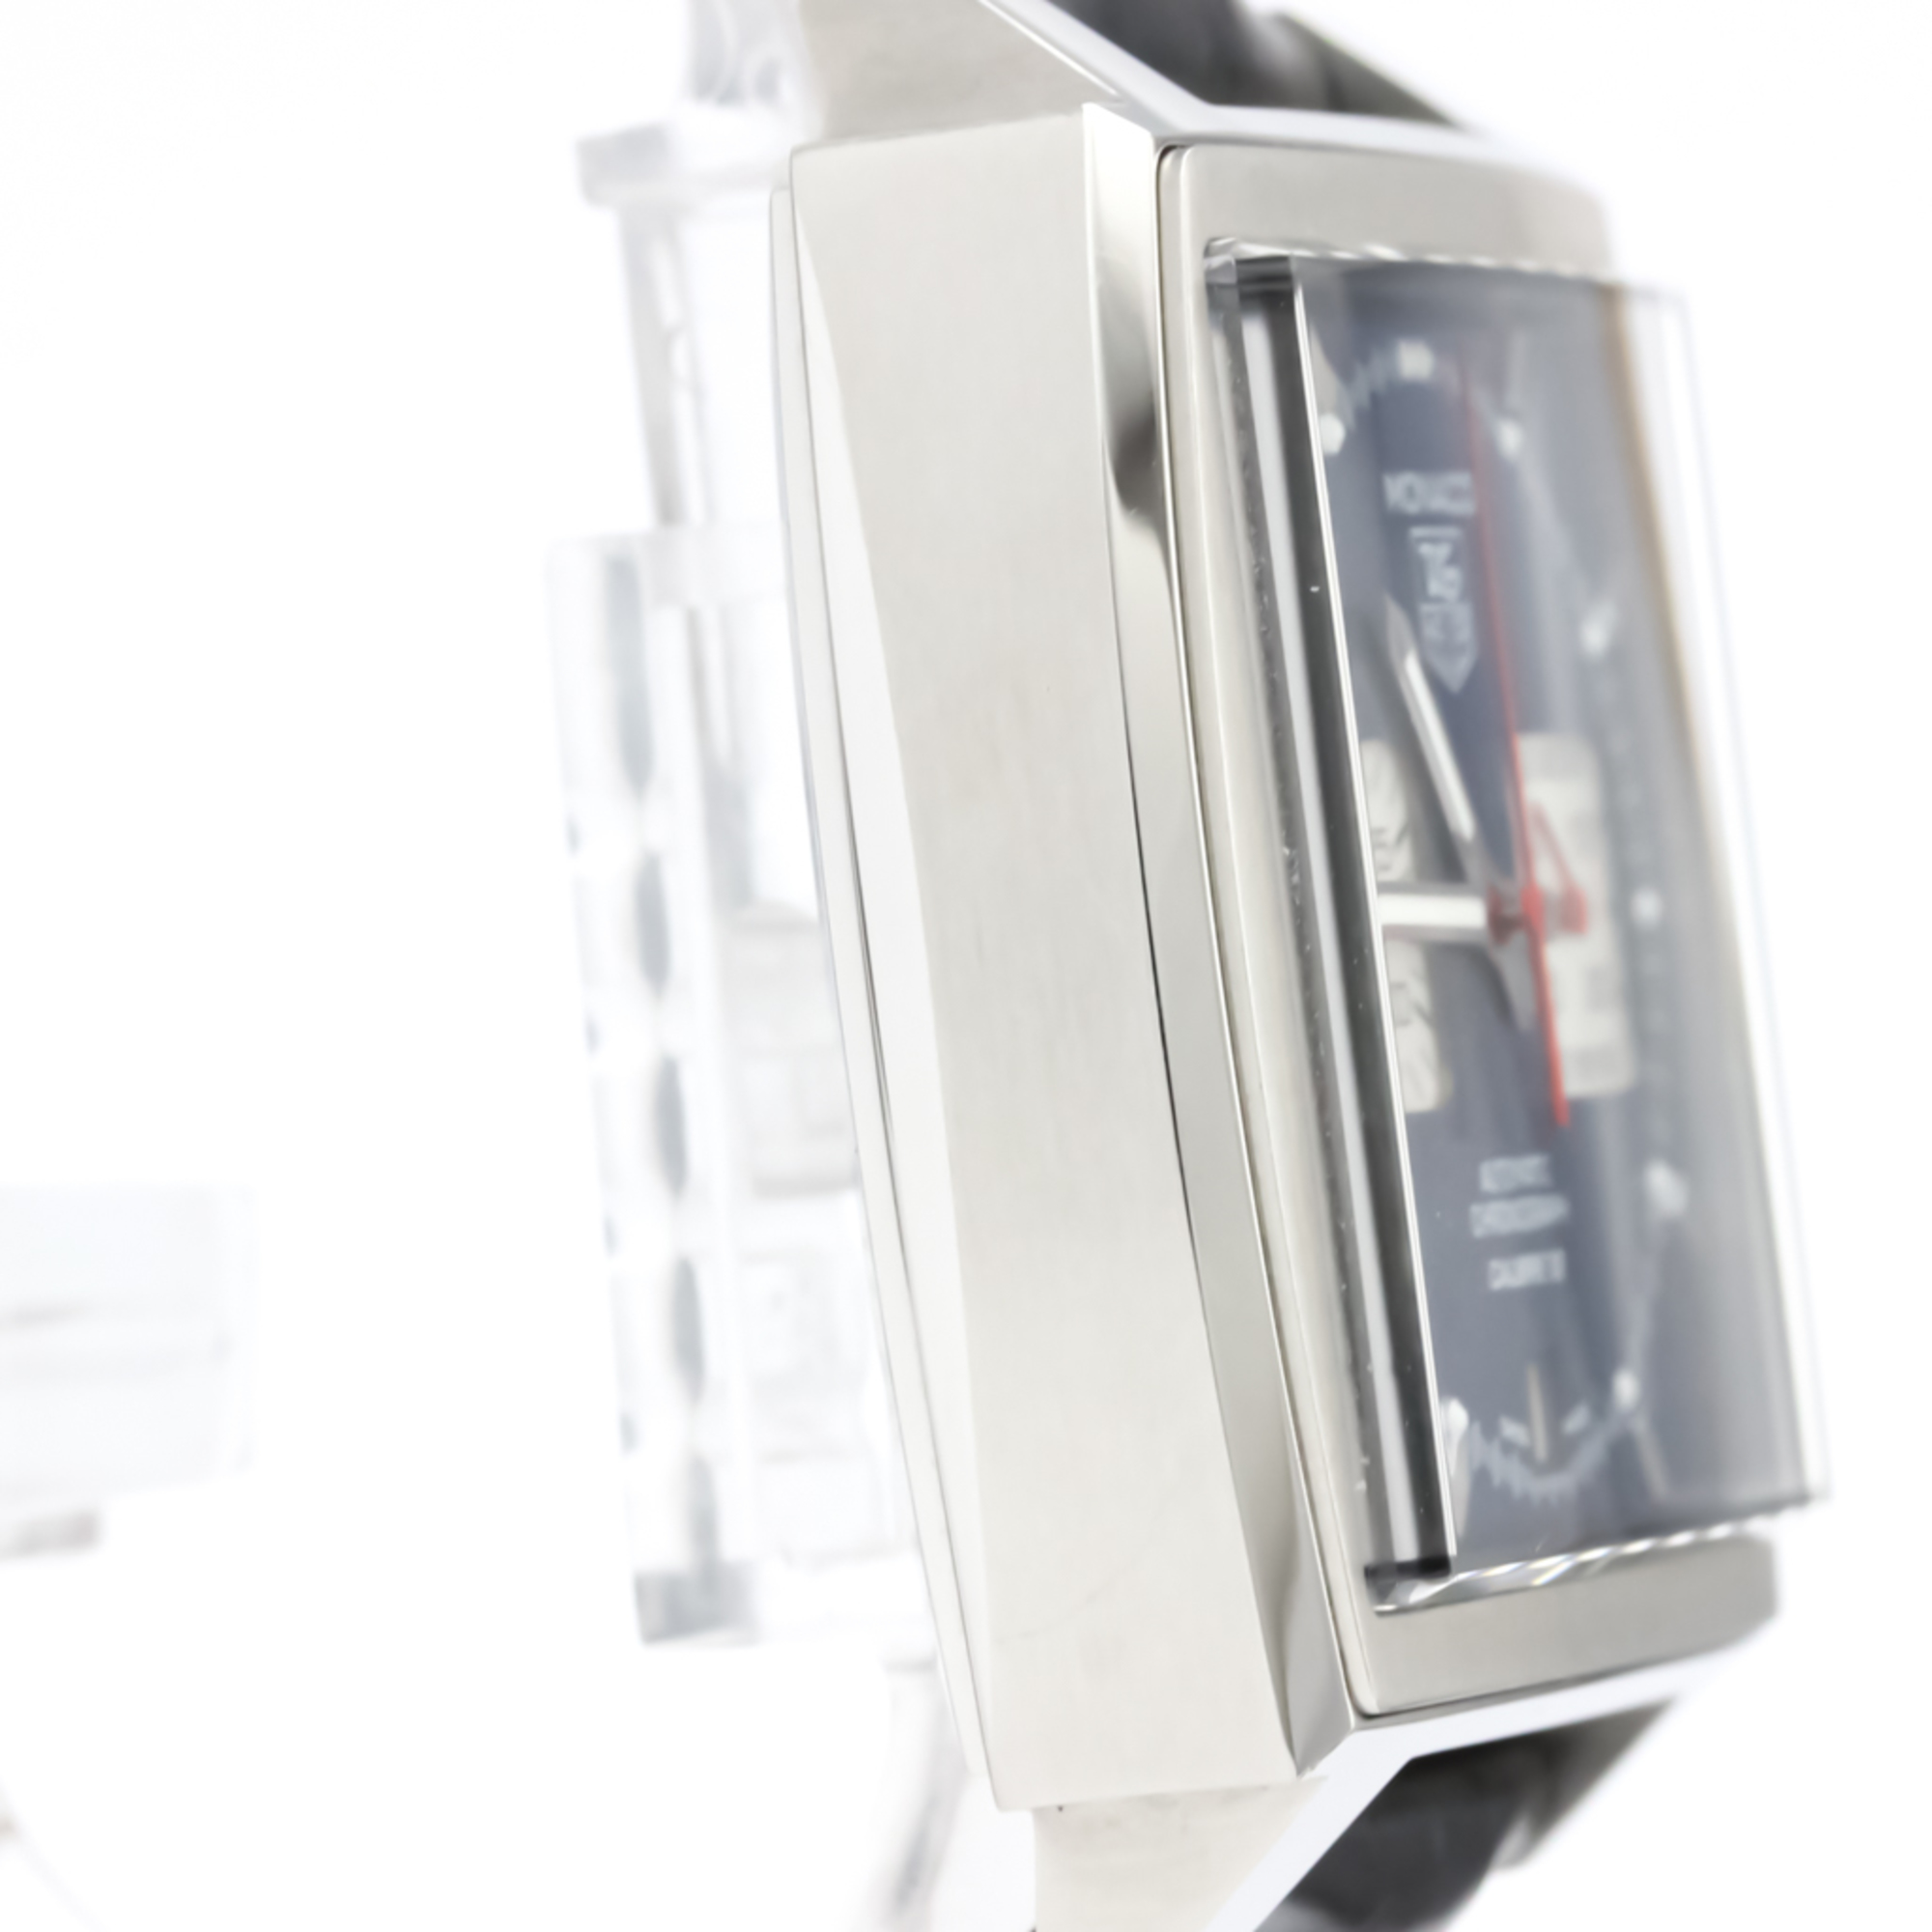 TAG HEUER Monaco Chronograph Steel Automatic Watch CAW2111